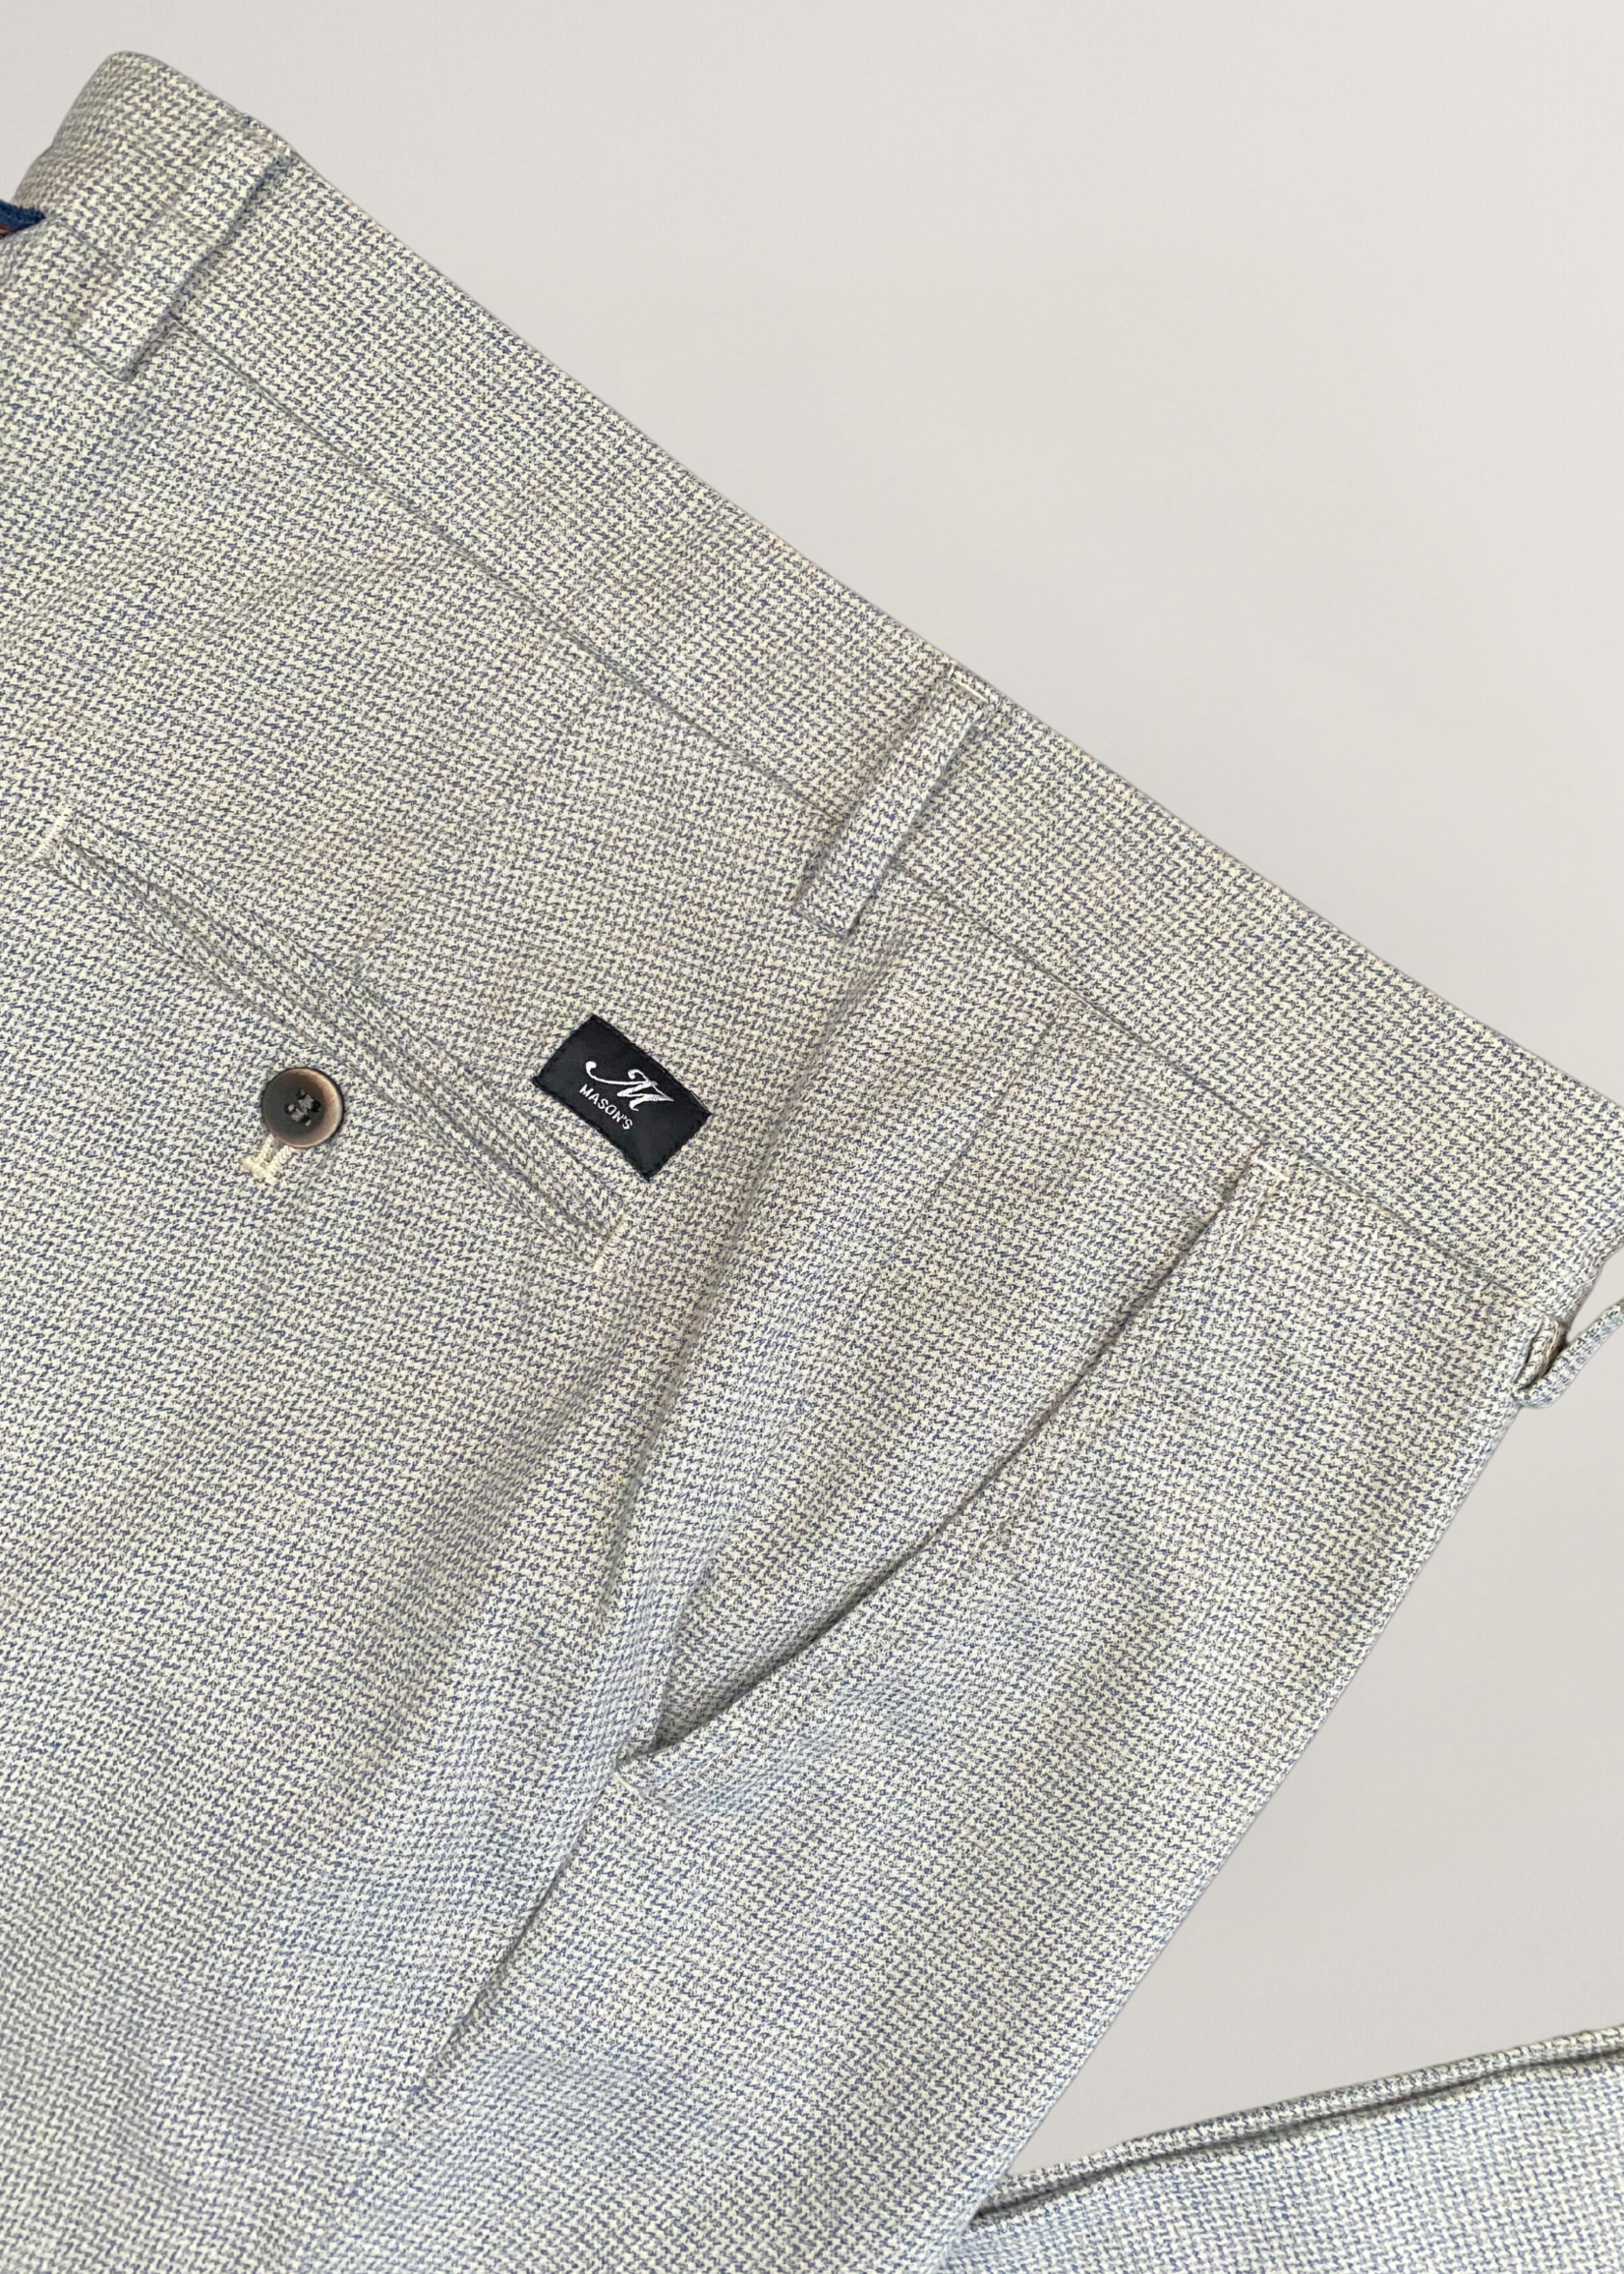 MASON'S Torino Style men's chino pants in cotton with micro print slim - Beige